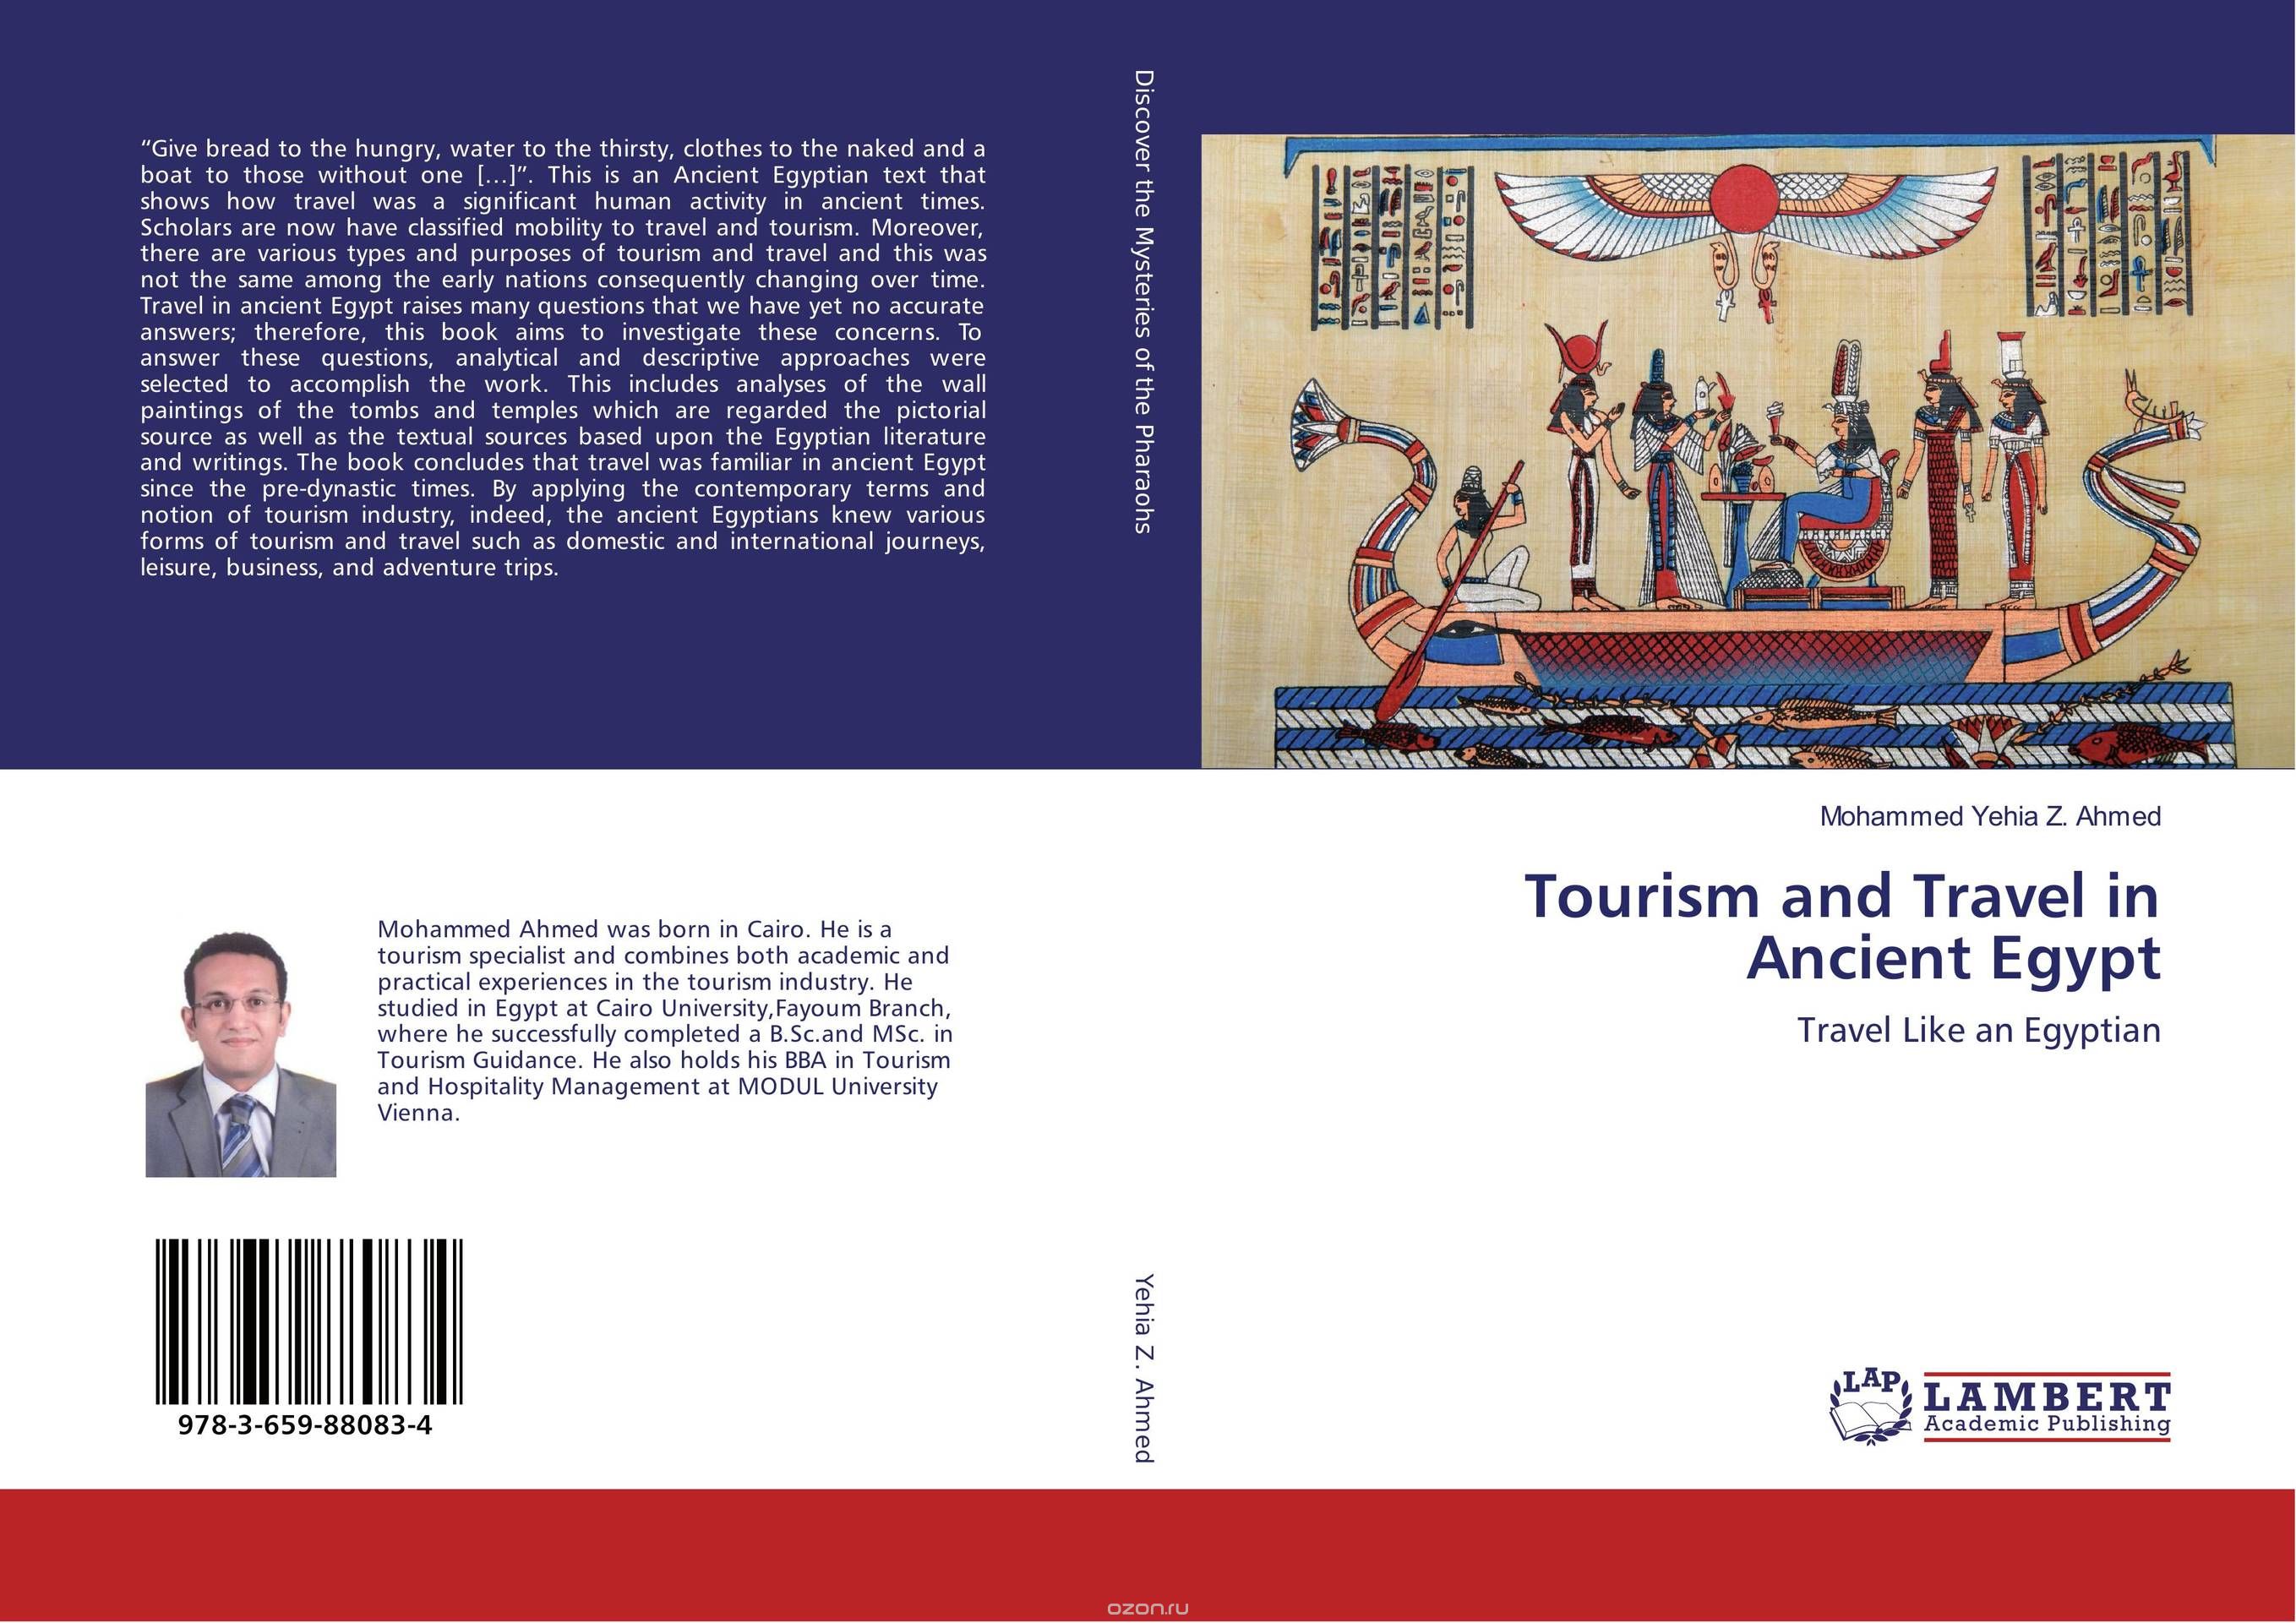 Скачать книгу "Tourism and Travel in Ancient Egypt"